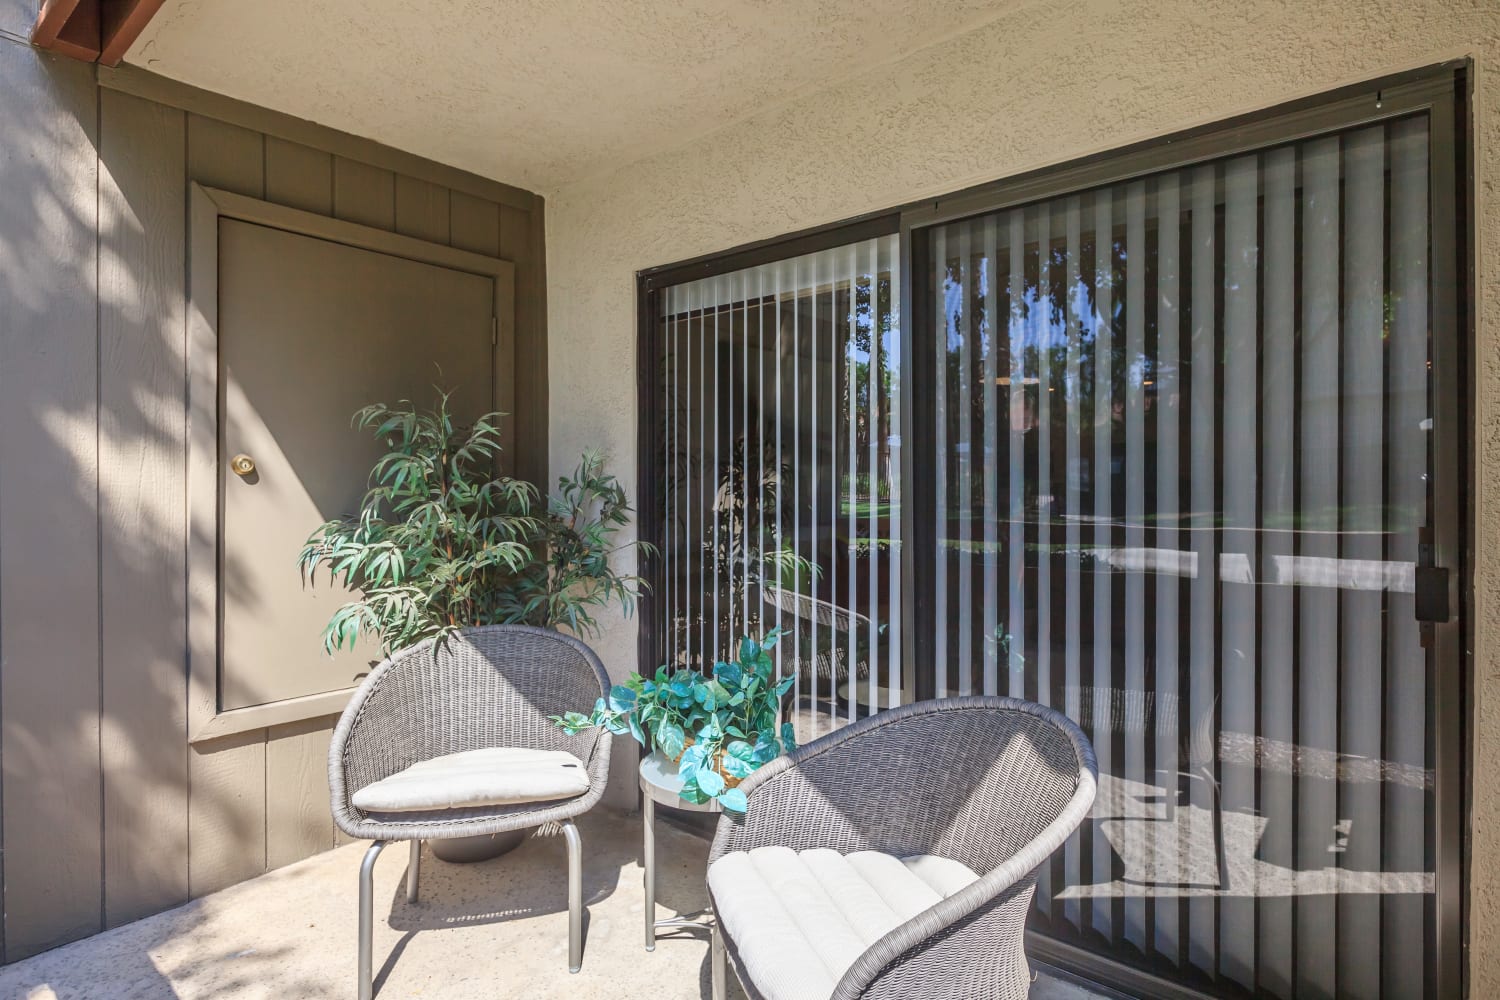 Private patio at Parcwood Apartments in Corona, California